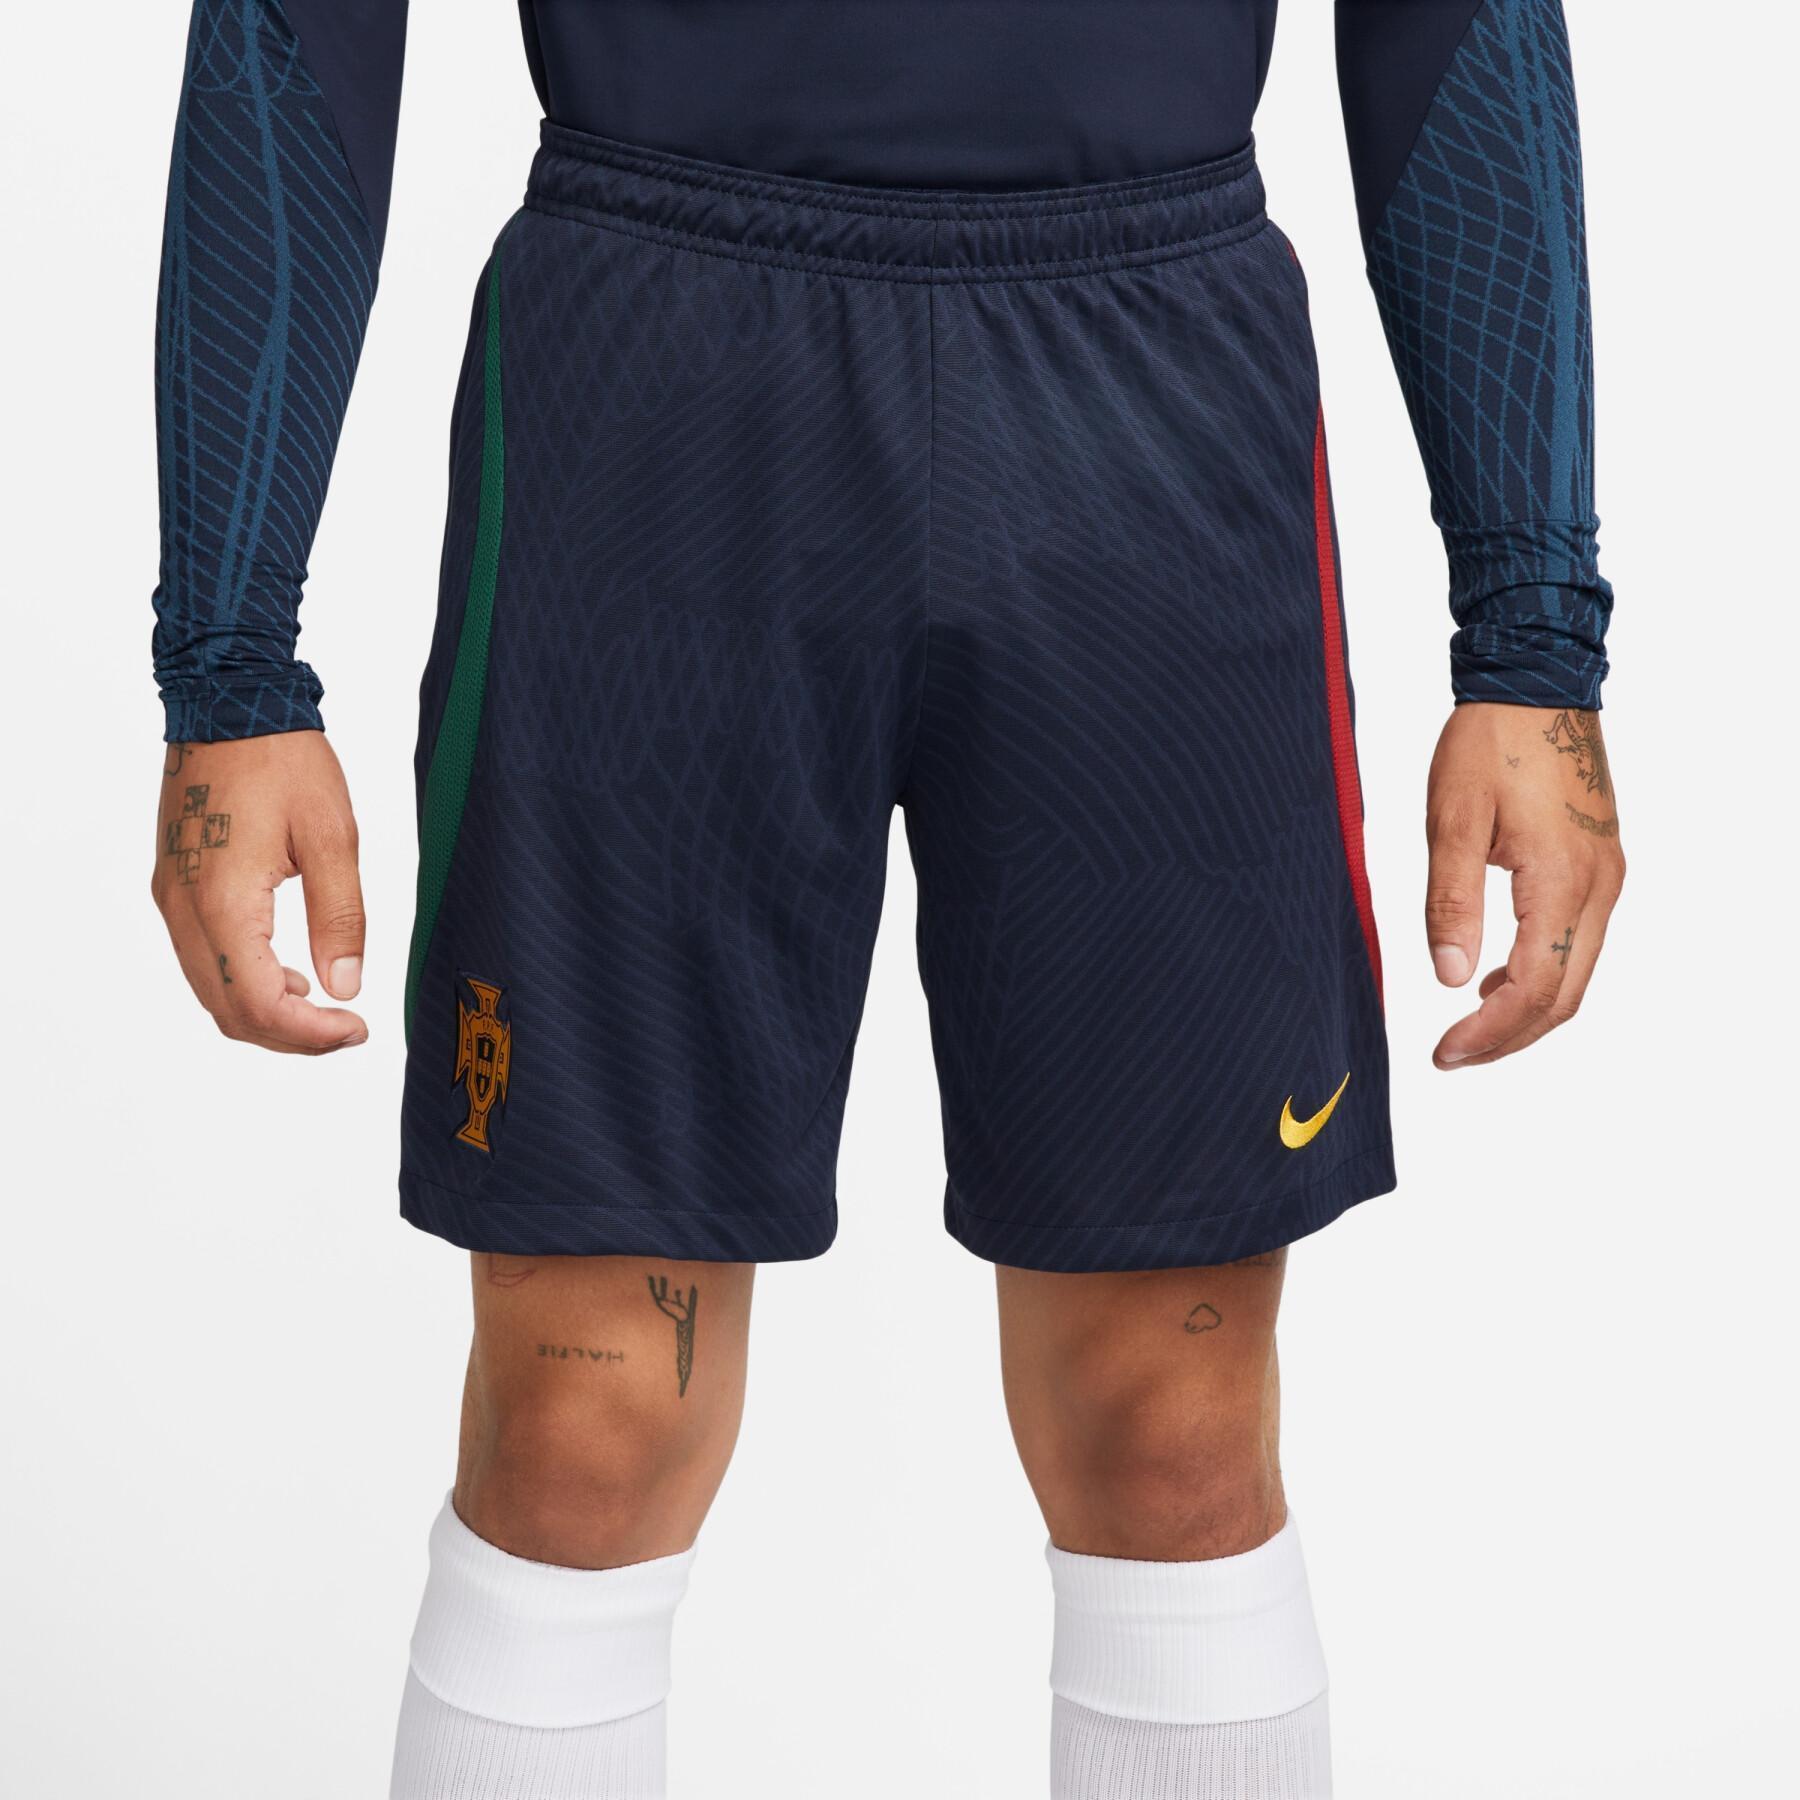 VM-shorts 2022 Portugal